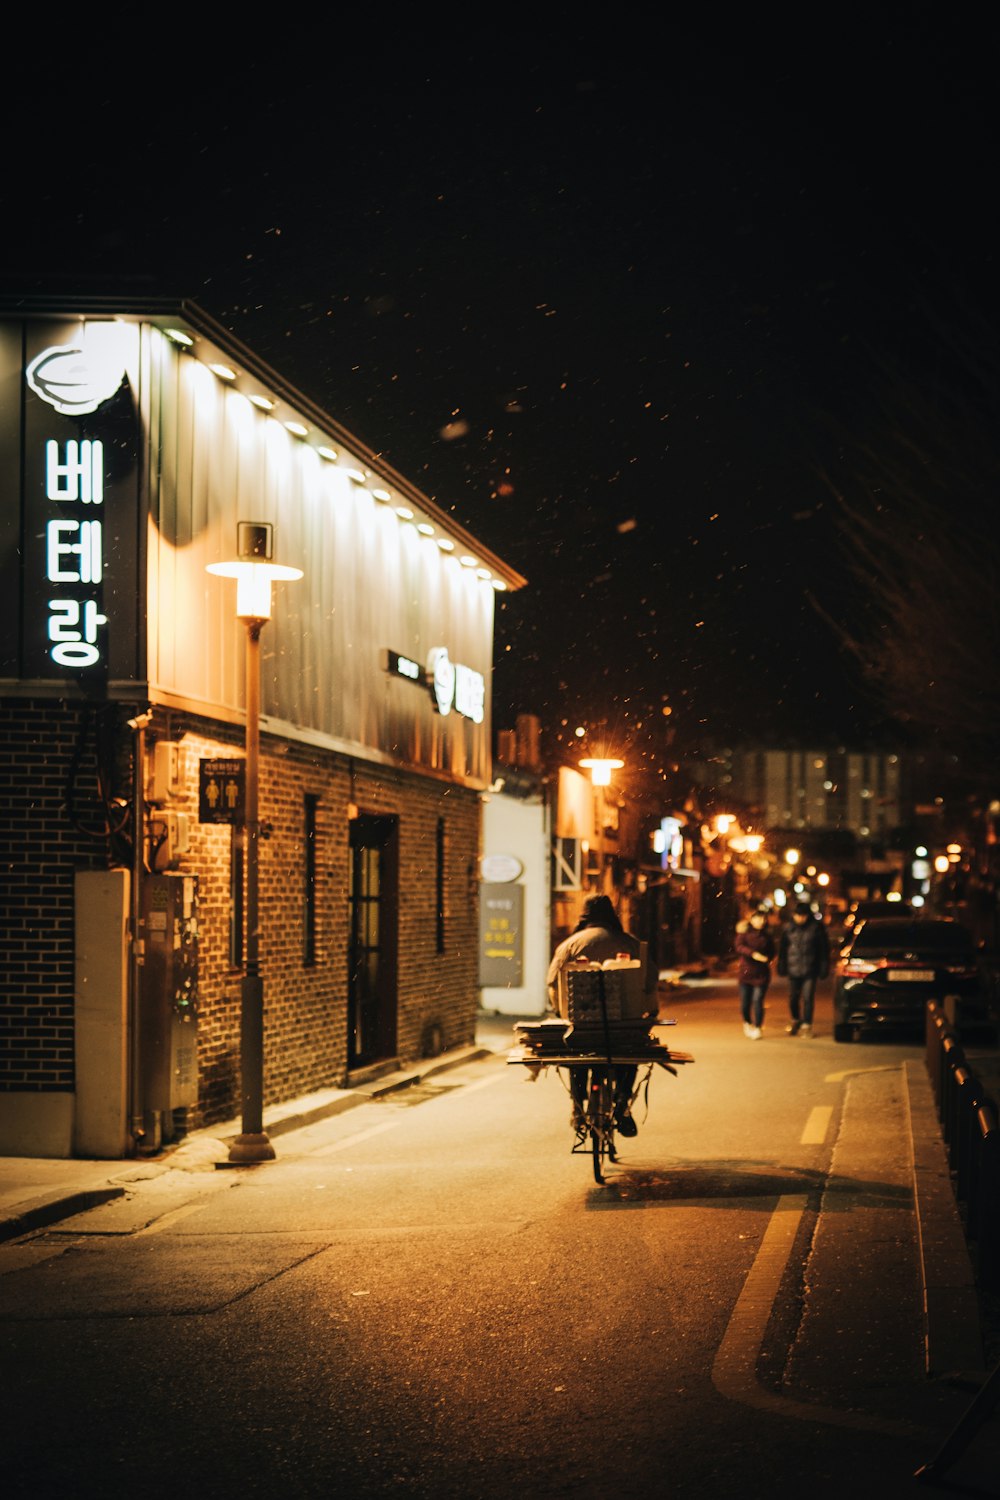 Casa coreana cerca del poste de luz